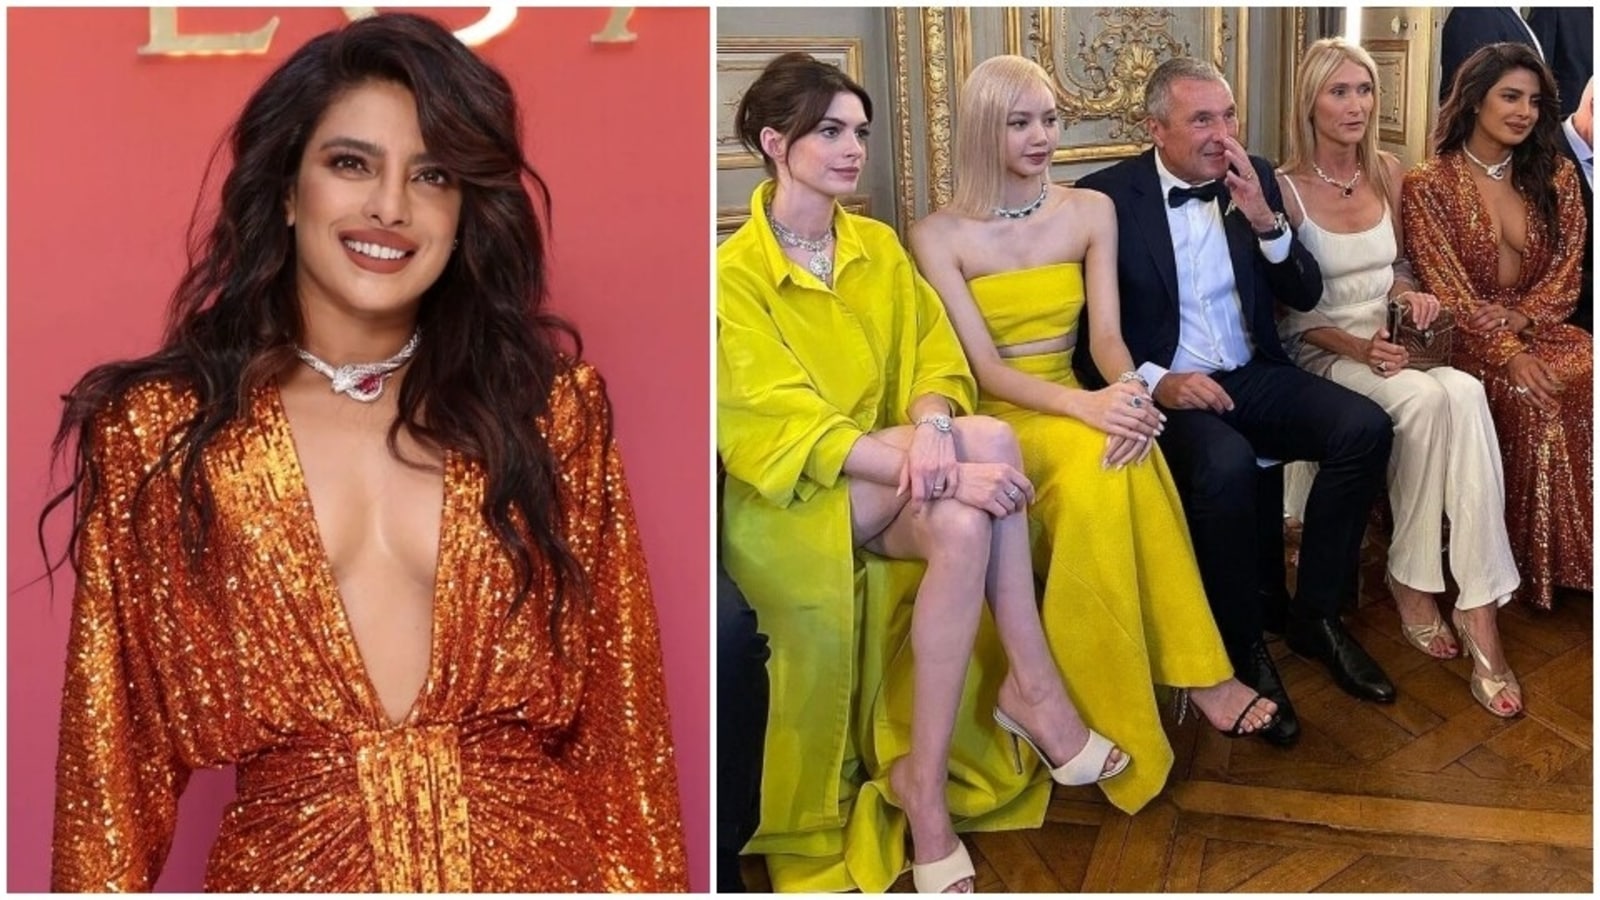 Priyanka Chopra, Anne Hathaway and Zendaya show off glamorous fashions in  Italy - Good Morning America